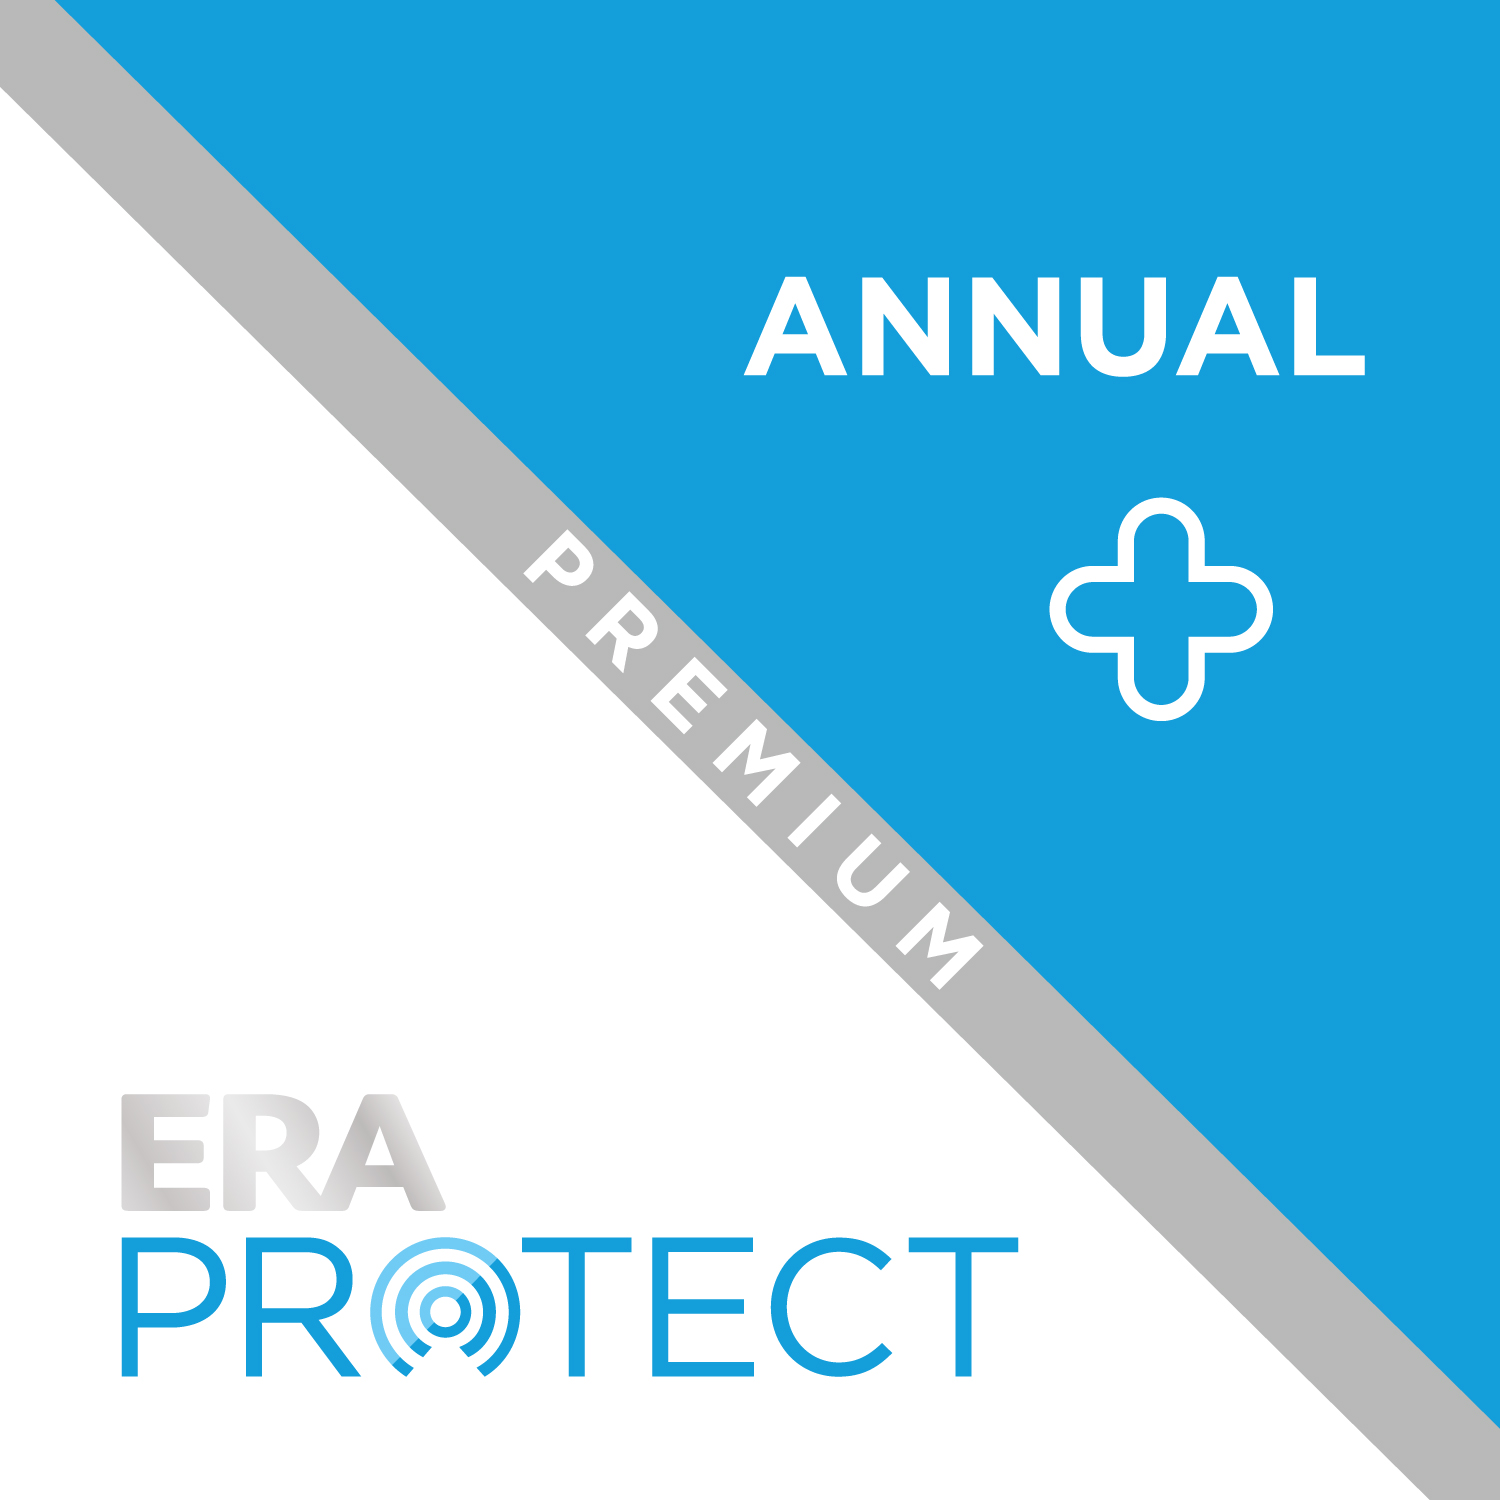 ERA Protect Plus Premium Subscription Package, Annual (12 months)